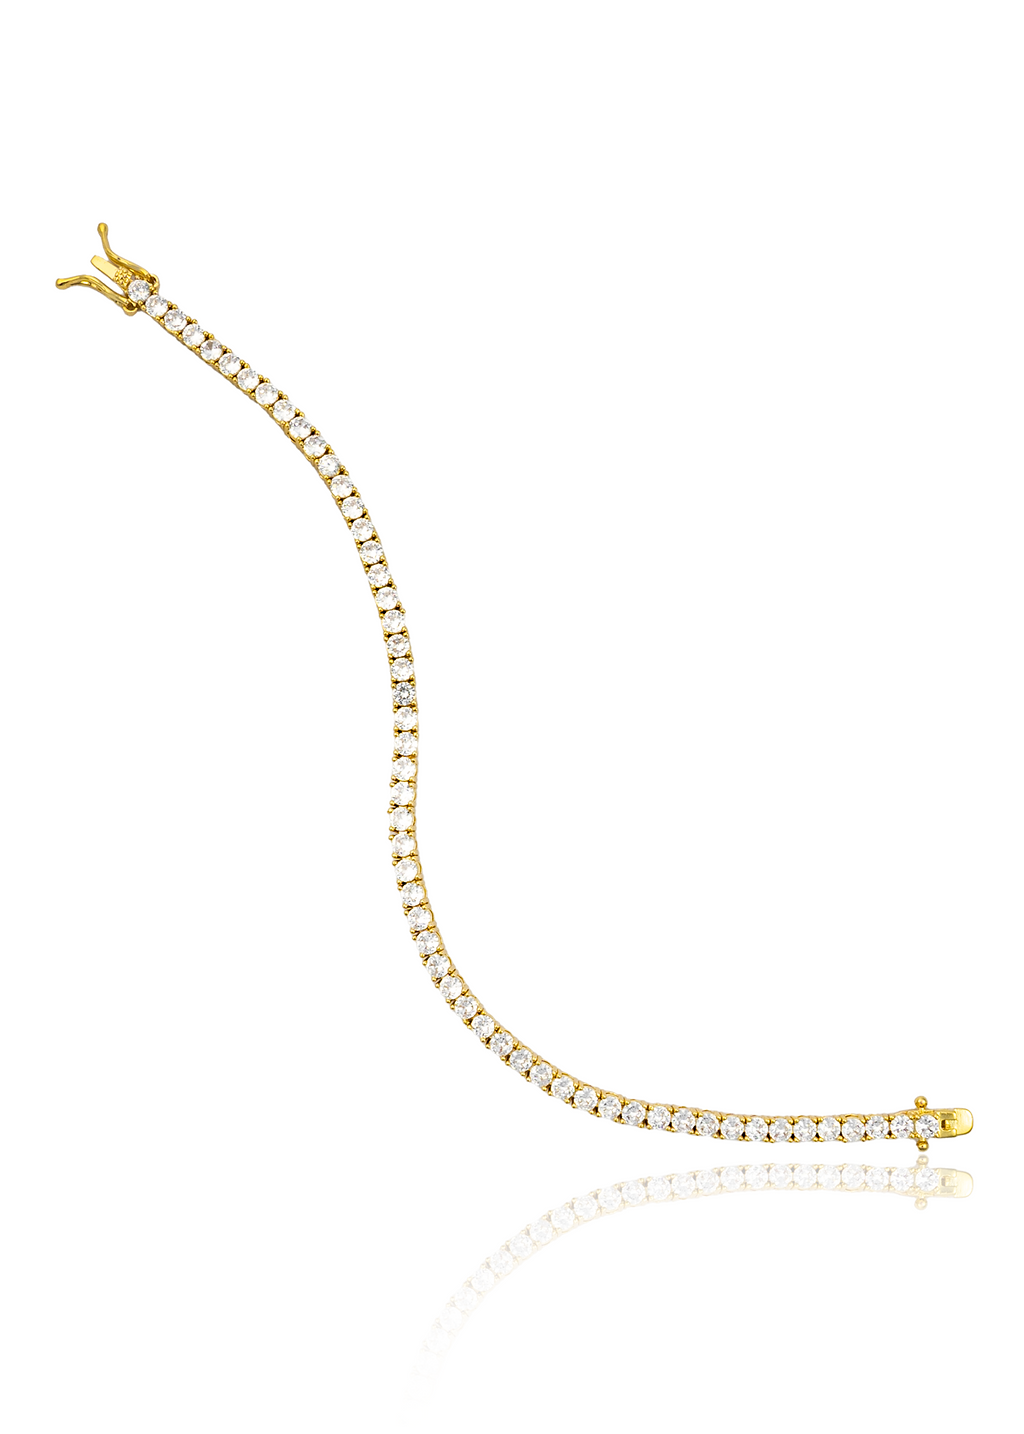 Diamond Tennis Necklace /  Bracelet with Cubic Zirconia Stones (I450)(H101)